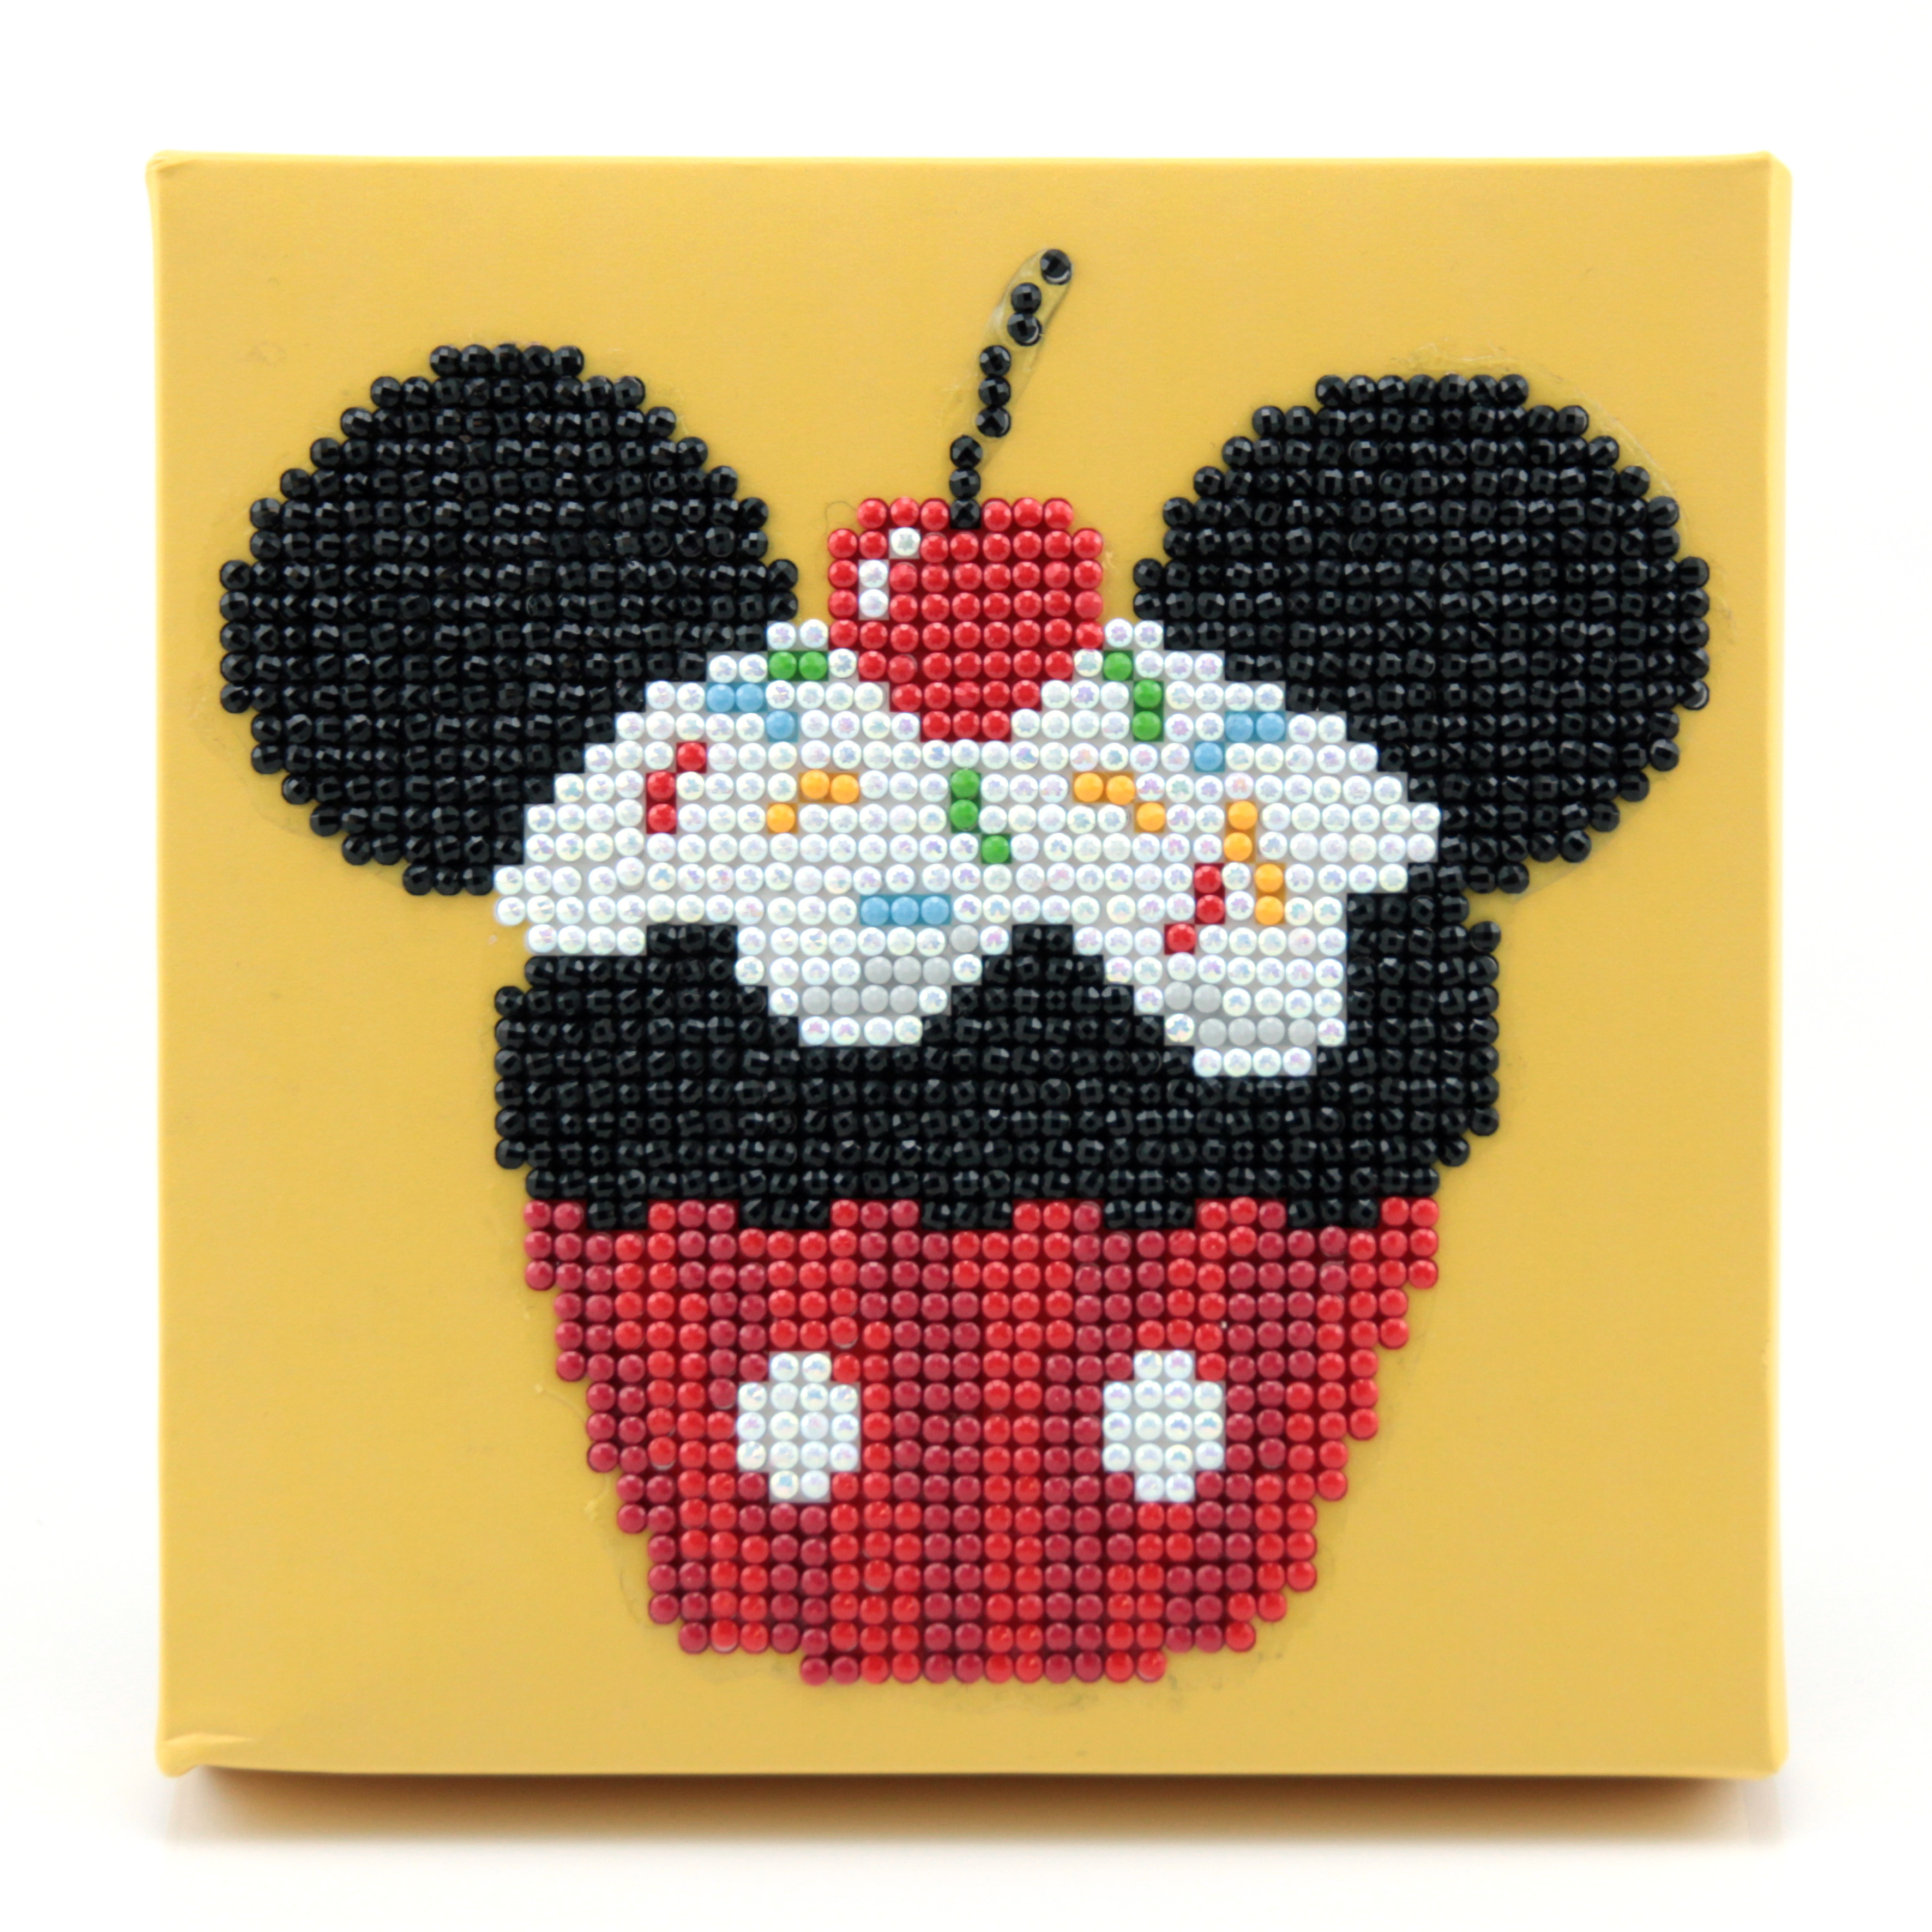 Diamond Dotz Facet Art Kit - Mickey Mouse